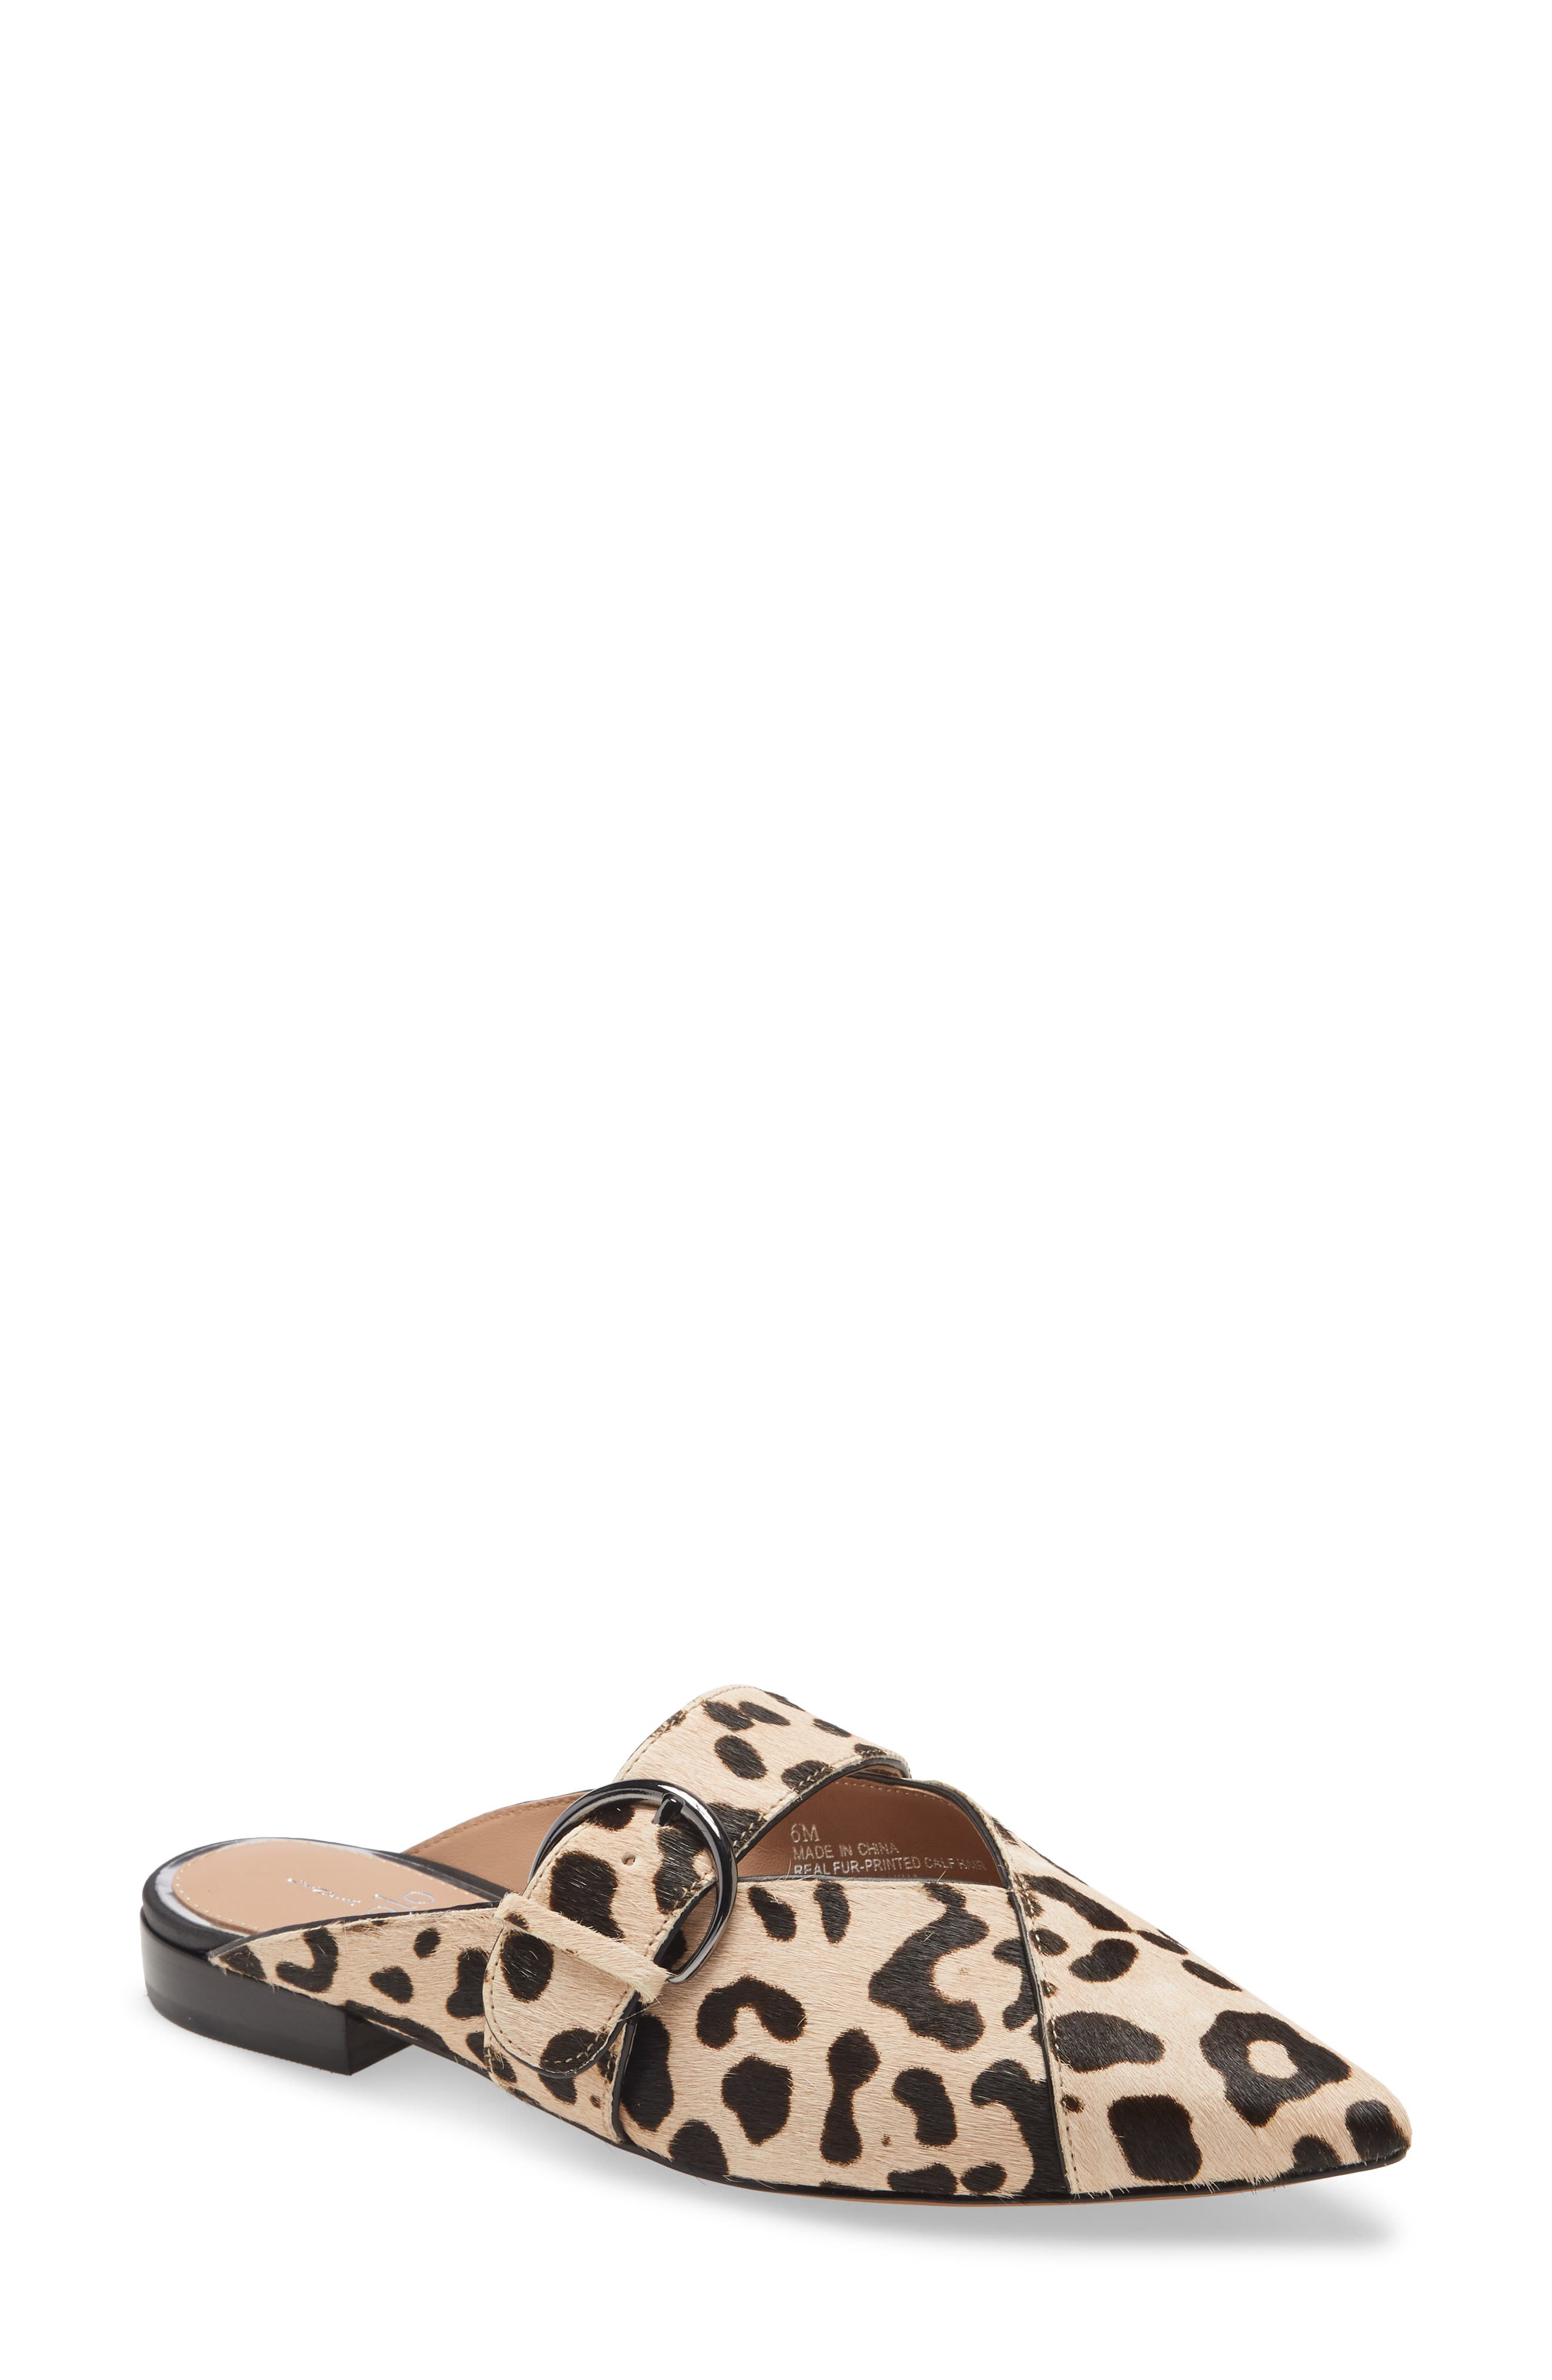 leopard mules womens shoes